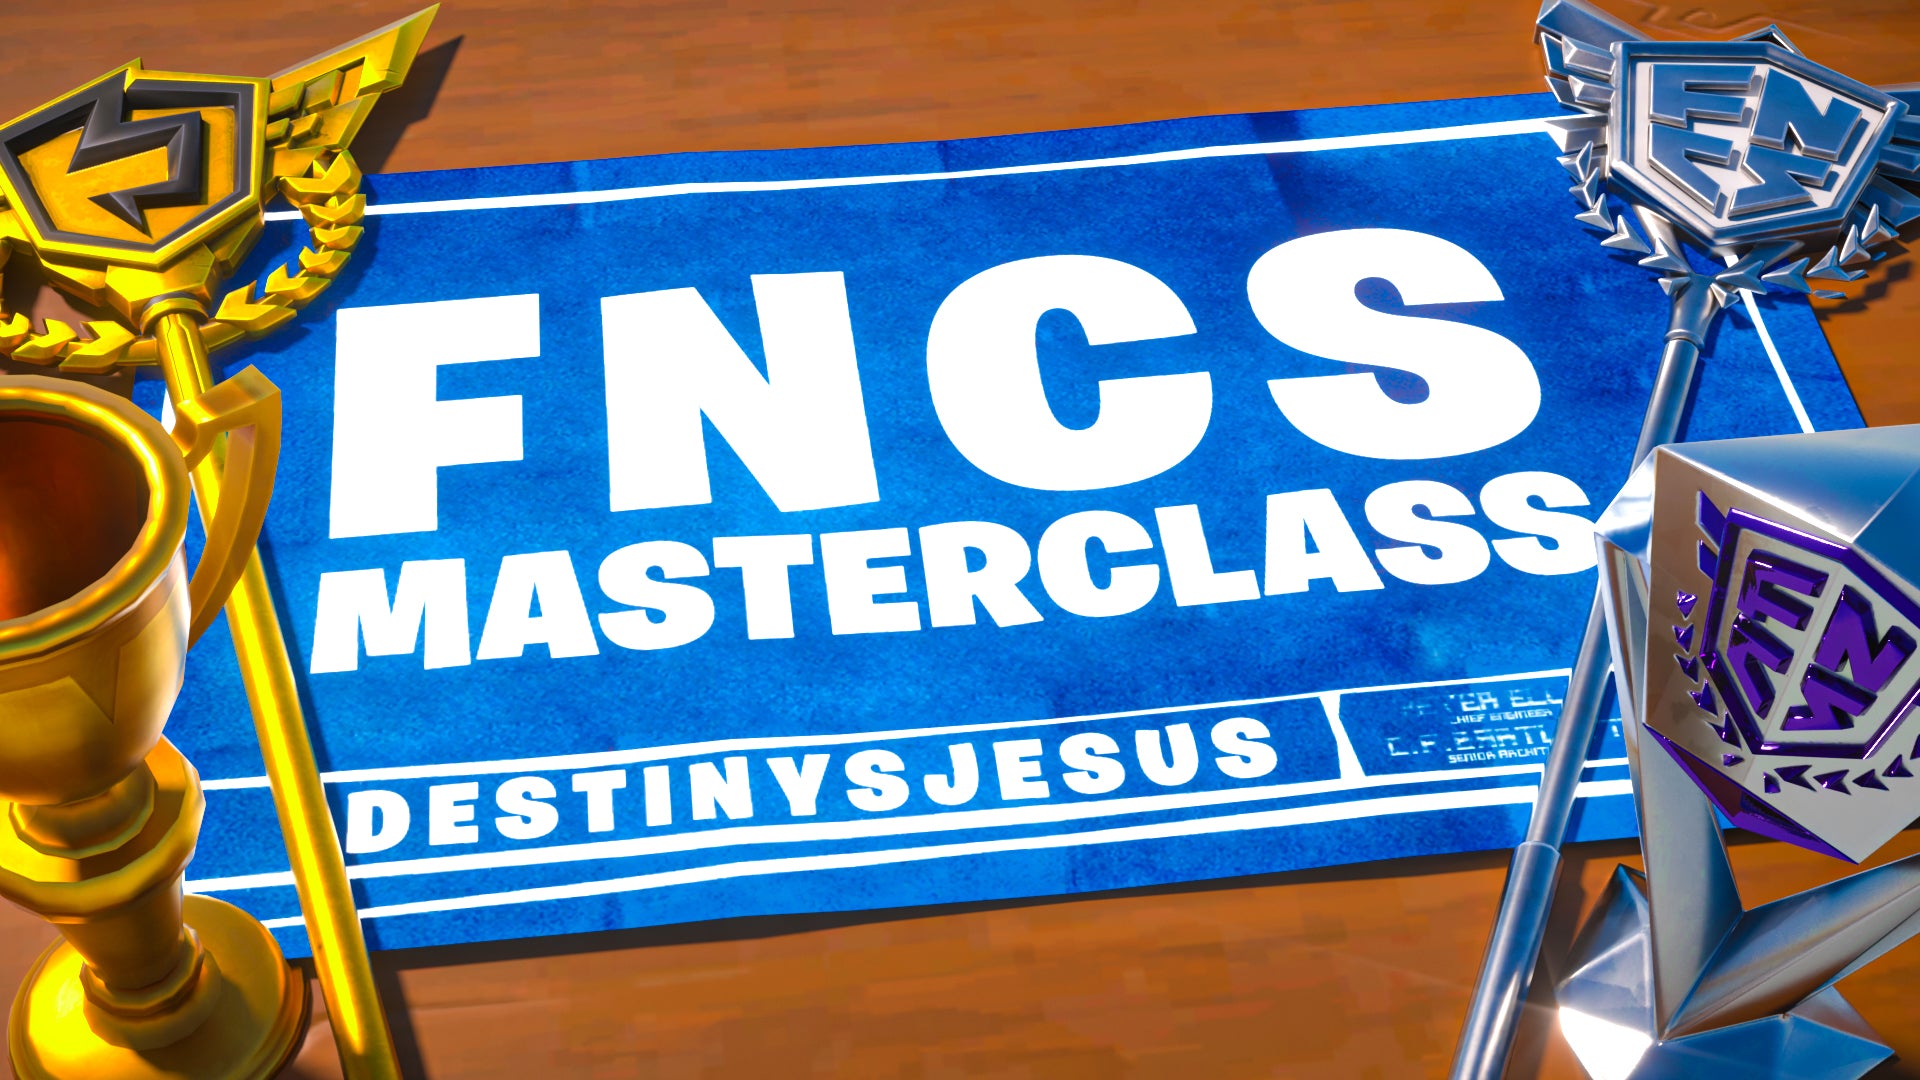 FNCS Masterclass